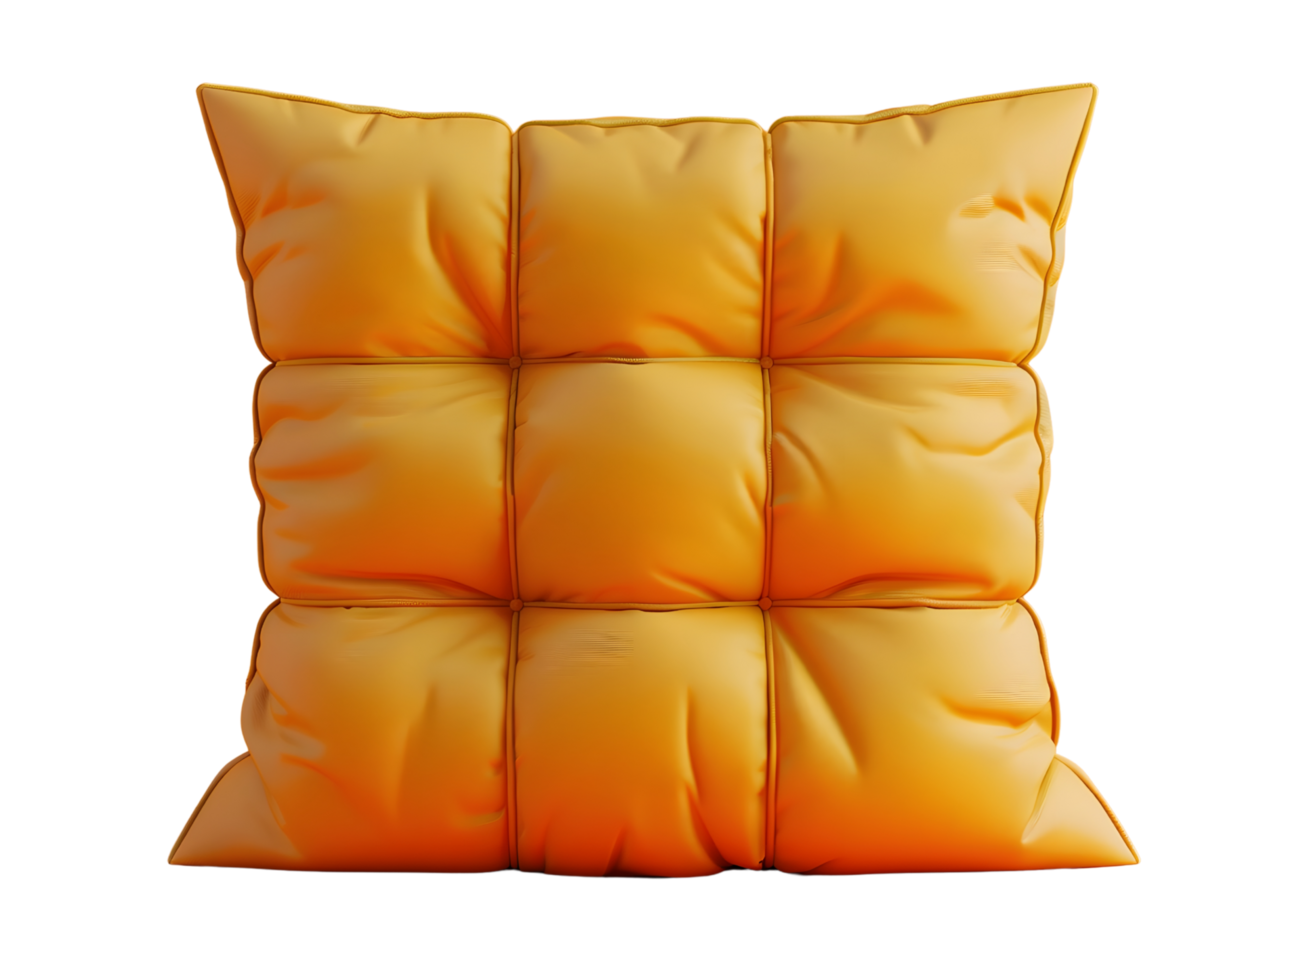 naranja a cuadros almohada, 3d ilustración elemento png